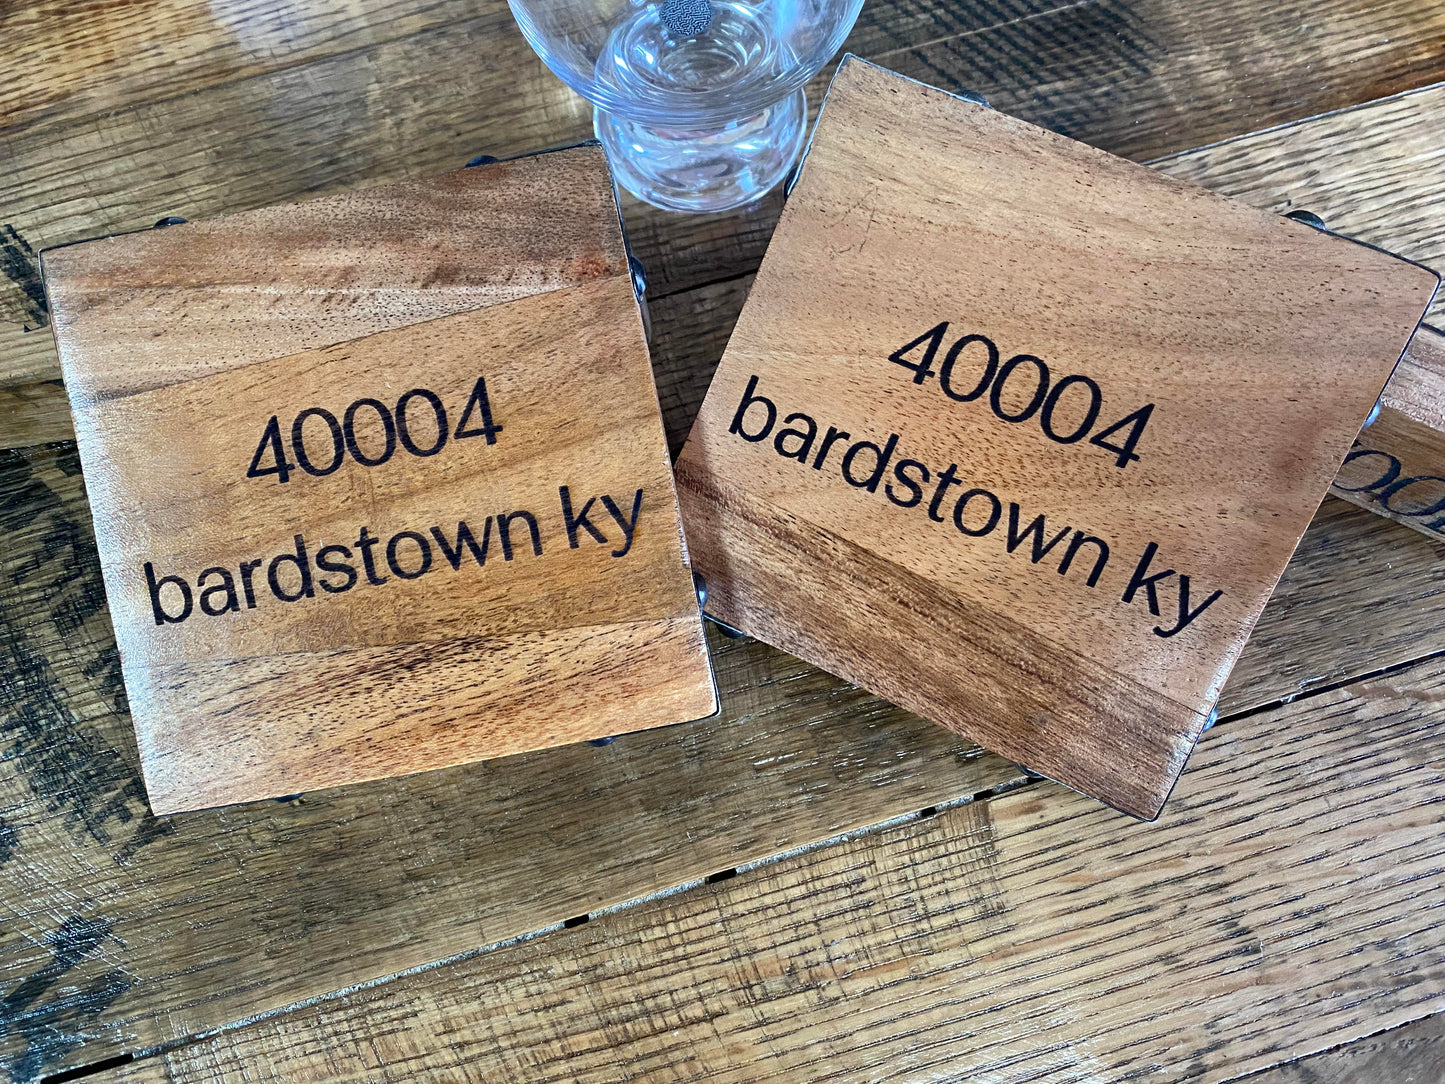 Laser Engraved Acacia Wood Coaster - "Bardstown 40004"